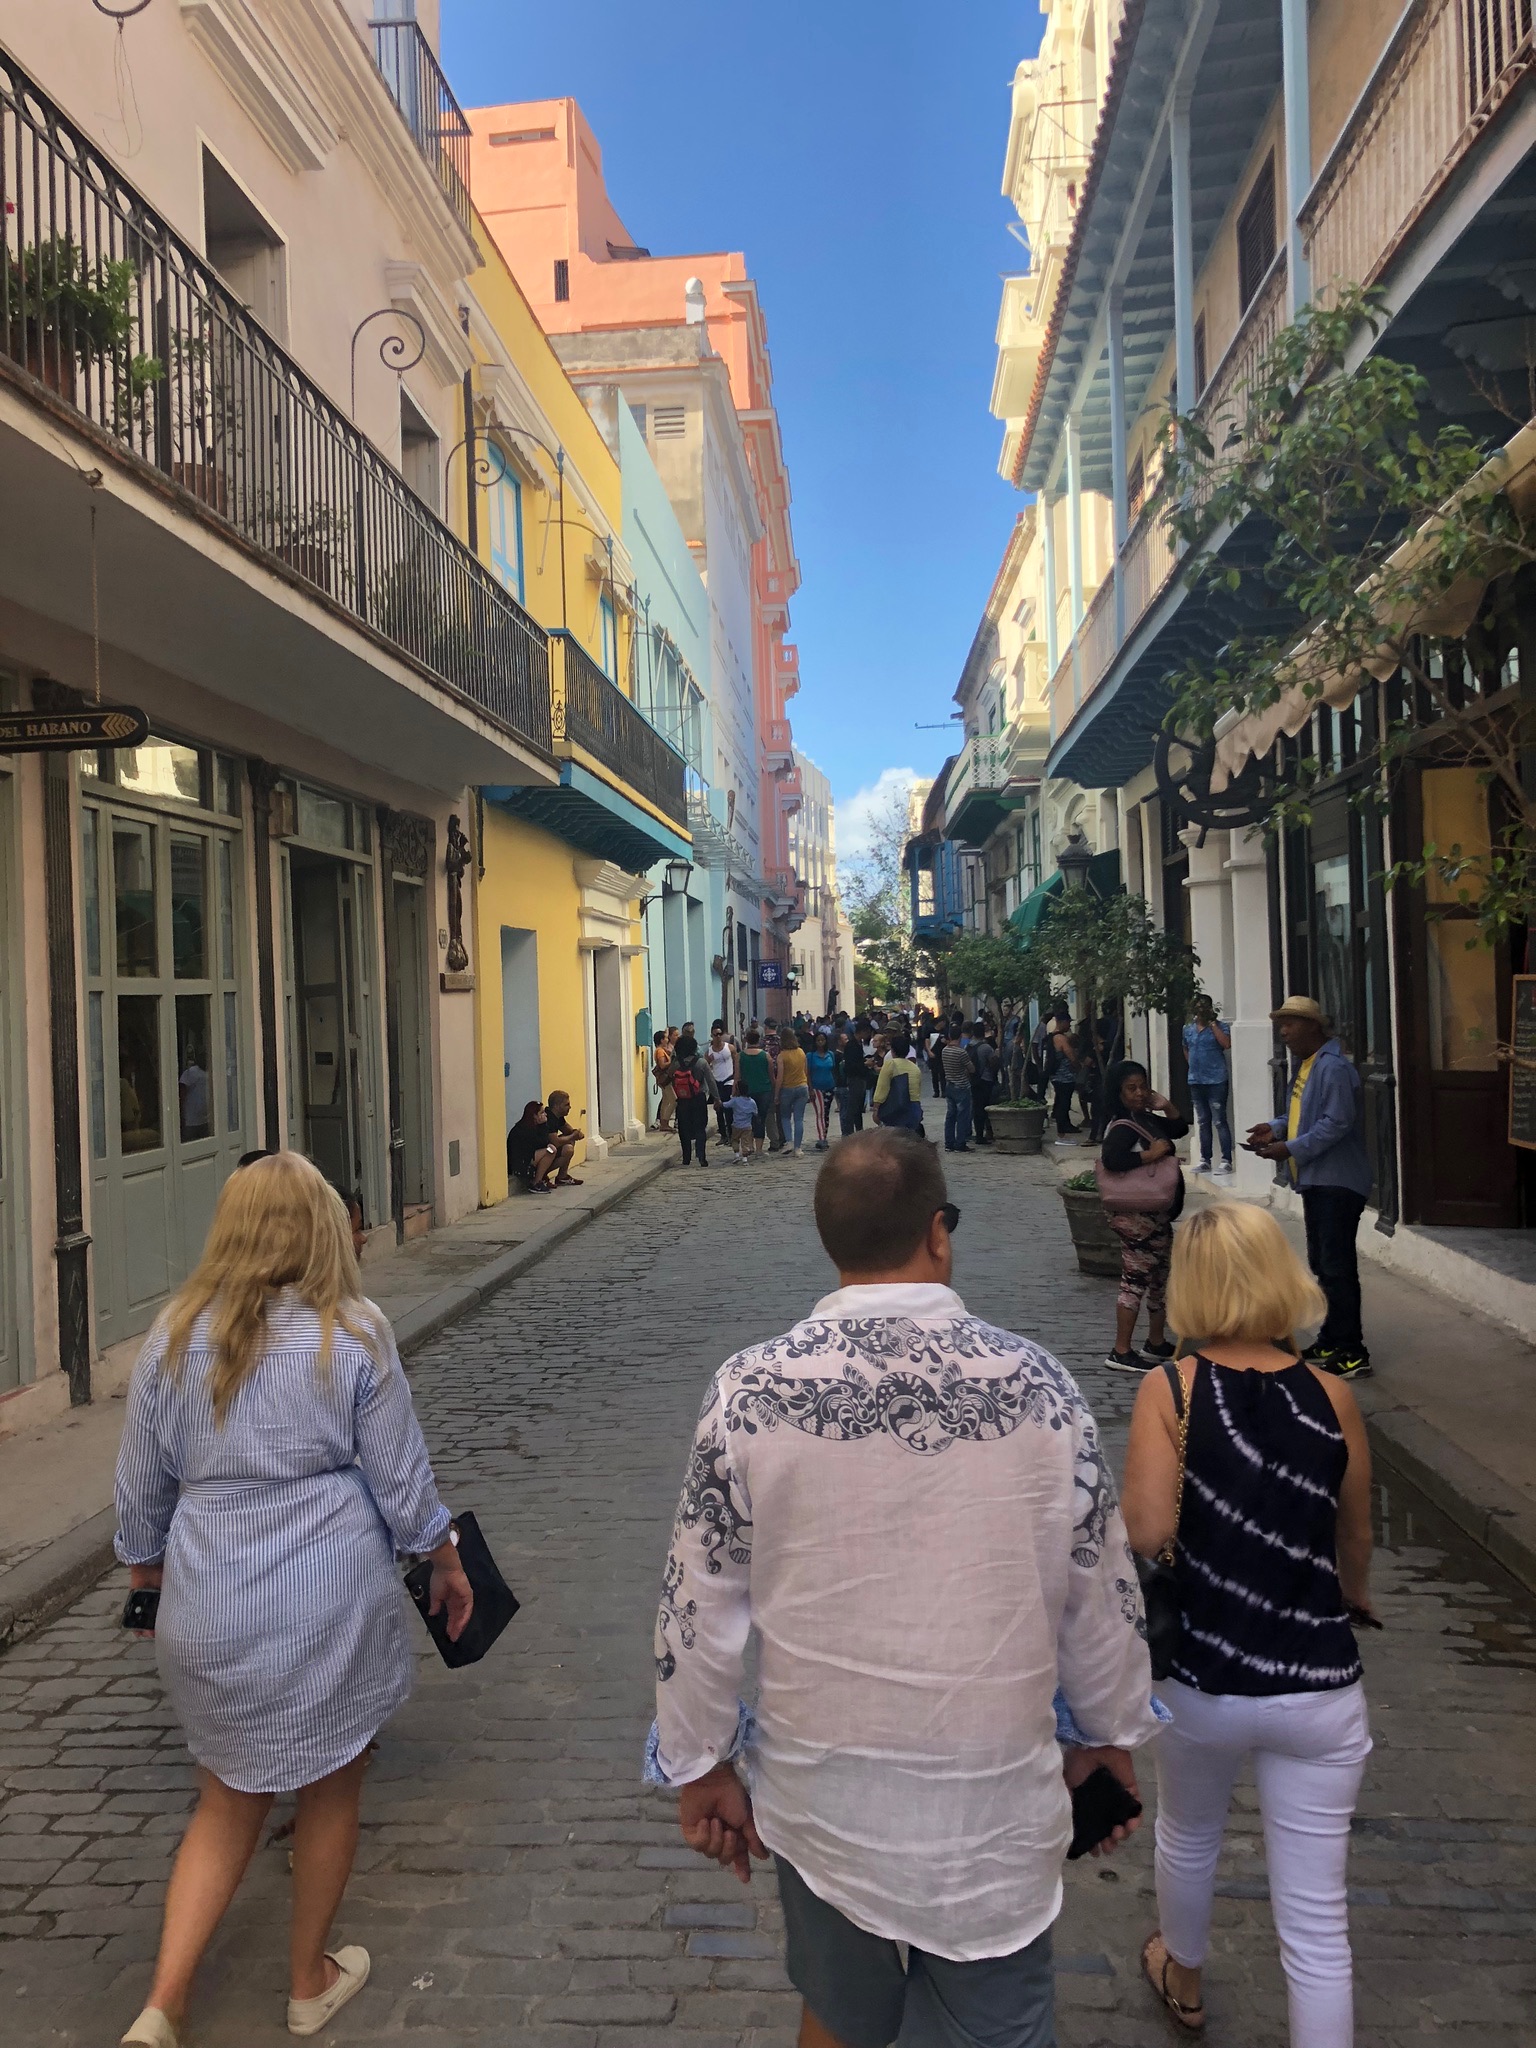 THIRDHOME Members touring the streets of Havana, Cuba